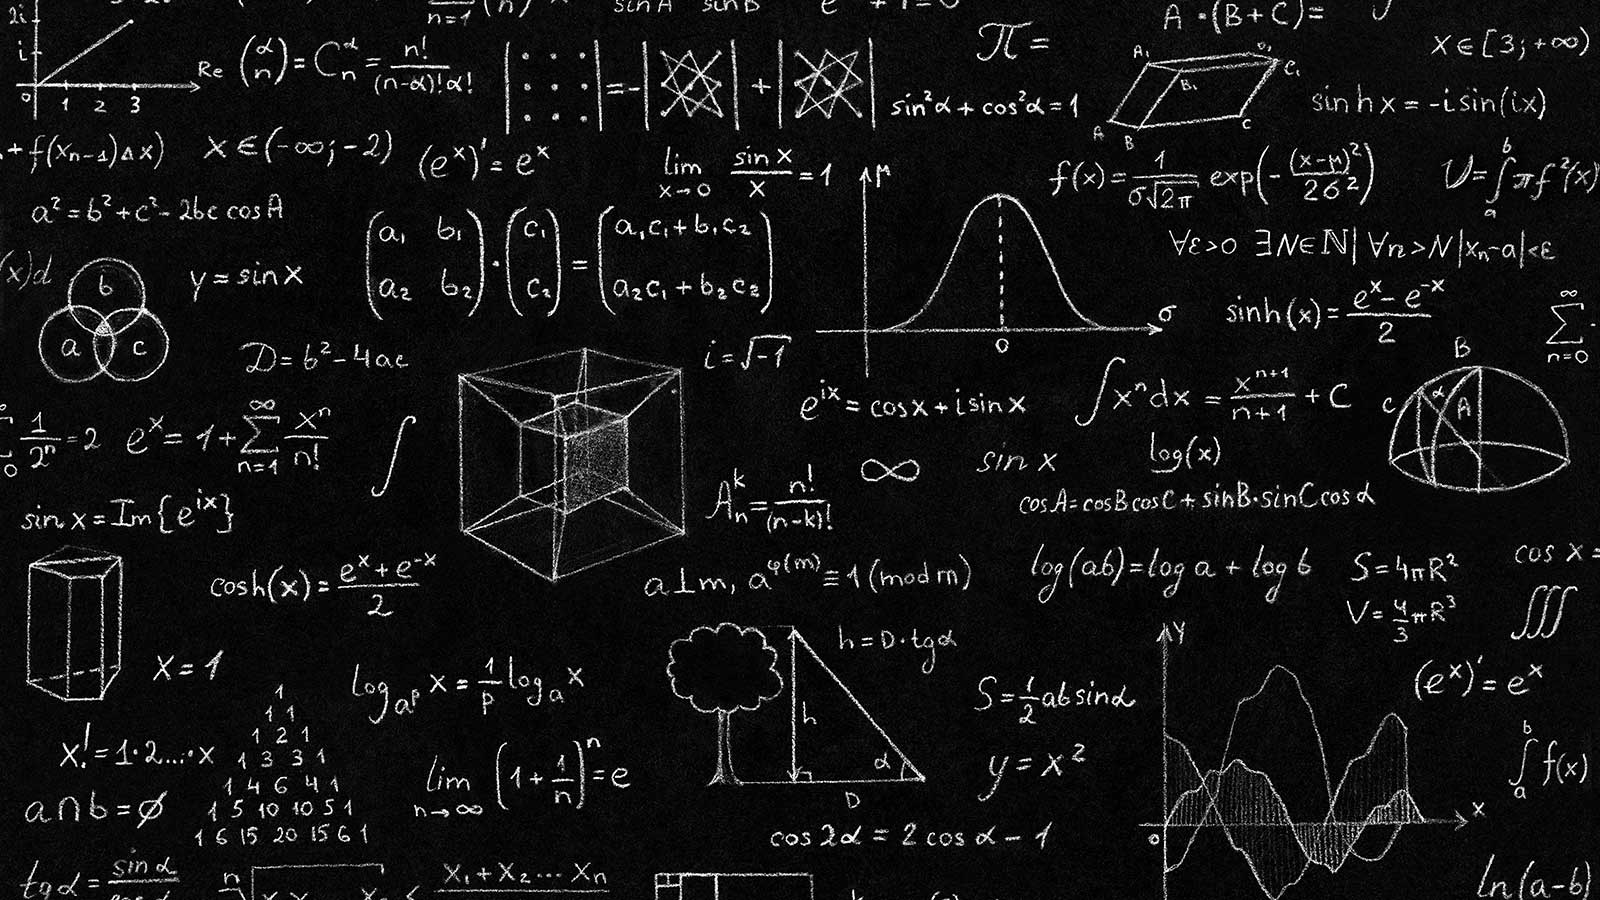 Math equations on blackboard representing Mathematics programs at Clarkson